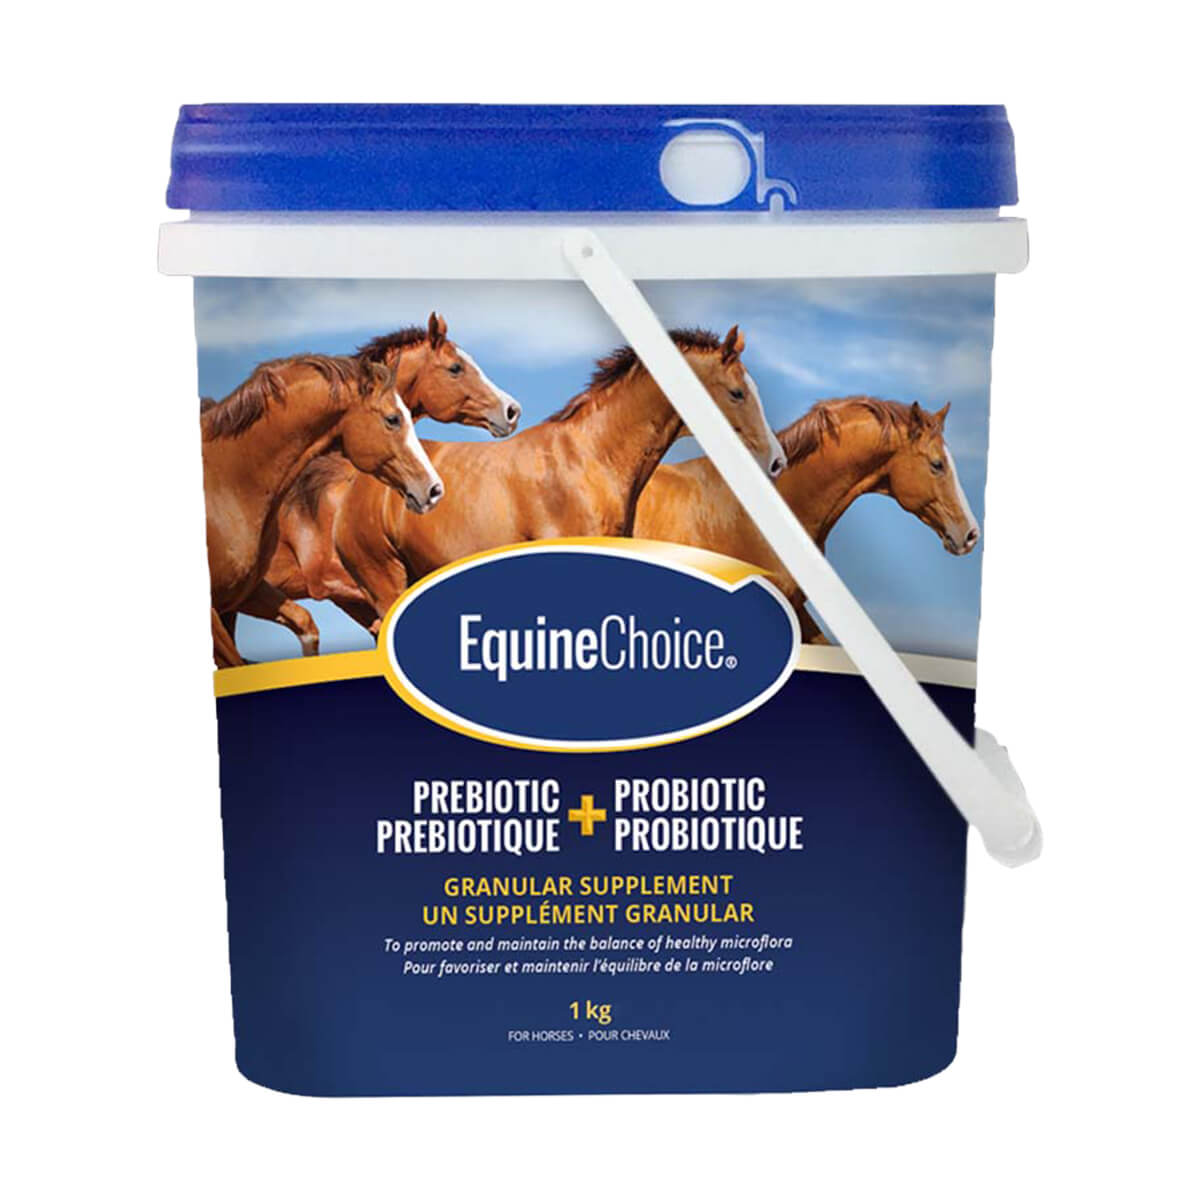 Equine Choice Pre & Probiotic - Granular